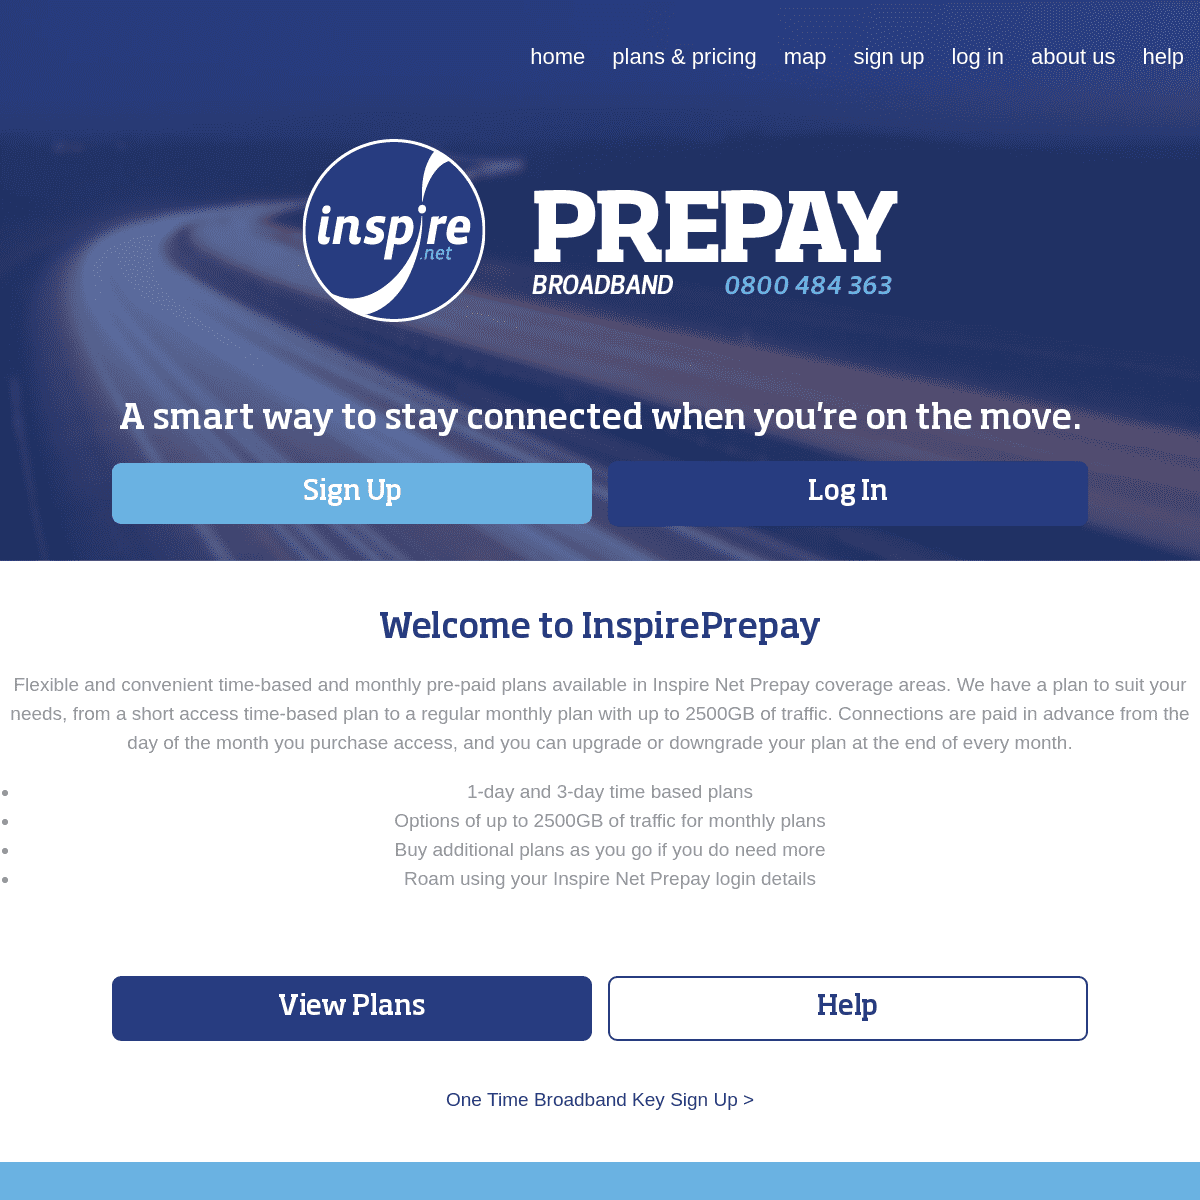 A complete backup of inspireprepay.net.nz